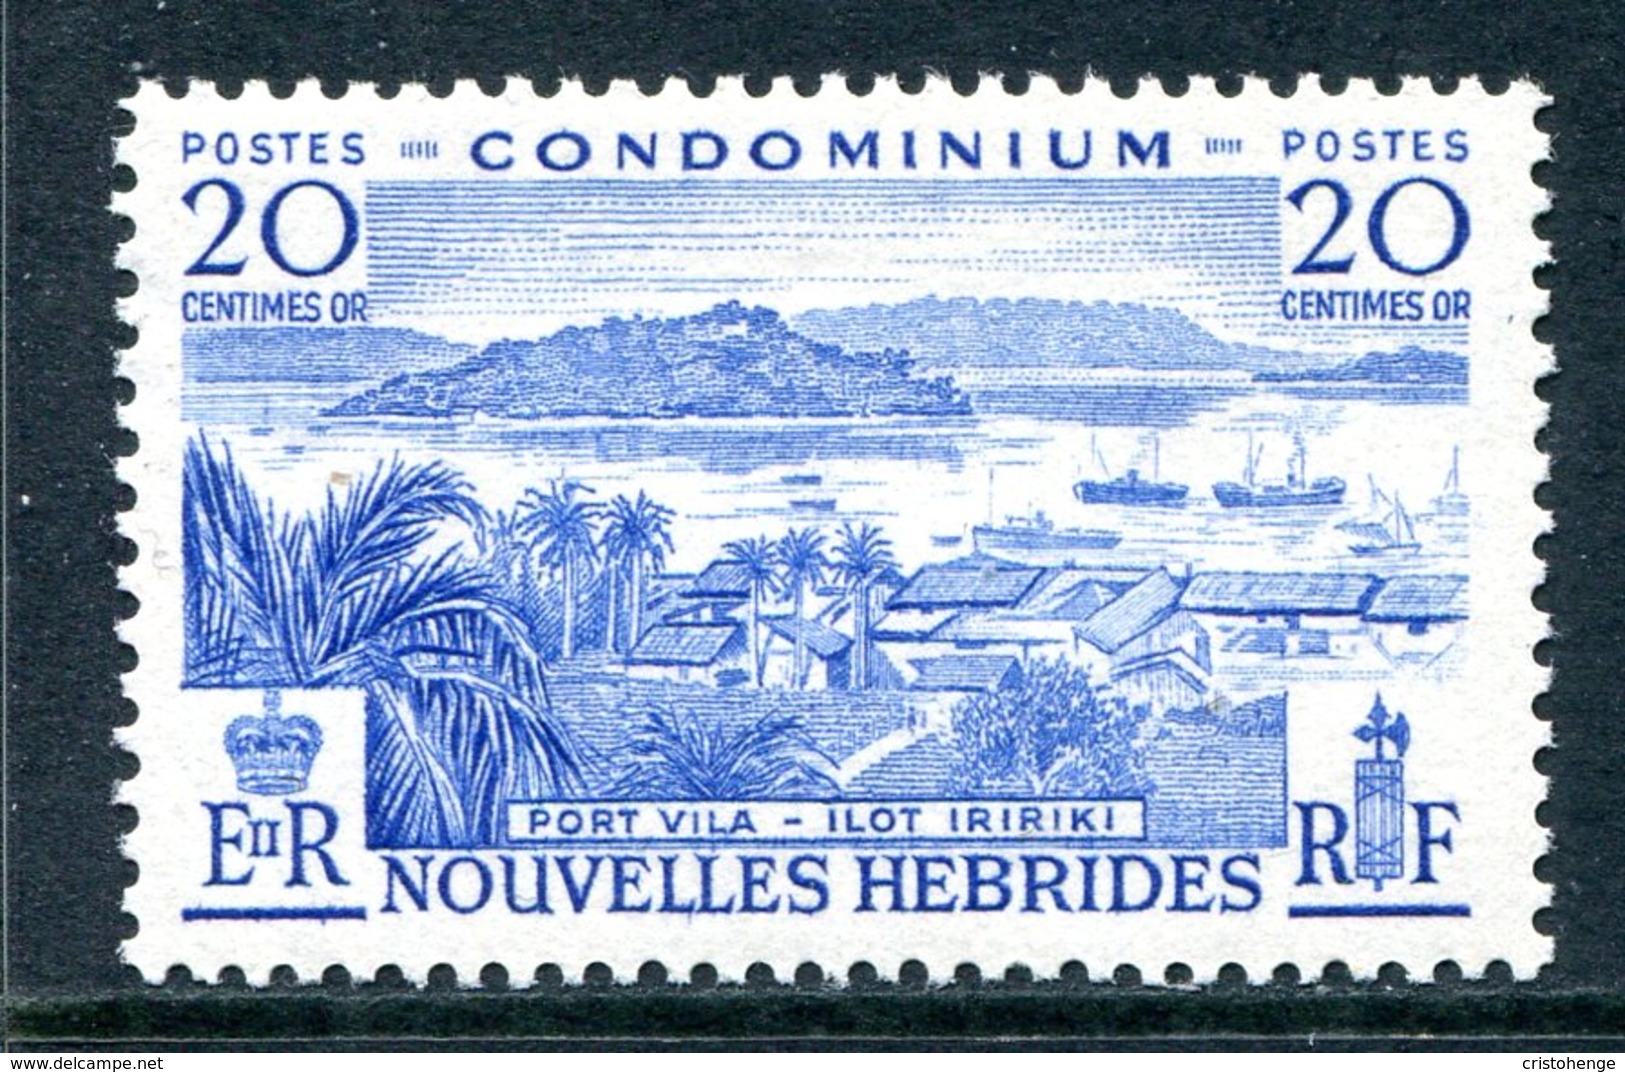 Nouvelles Hebrides 1957 Pictorials - 20c Value LHM (SG F99) - Used Stamps